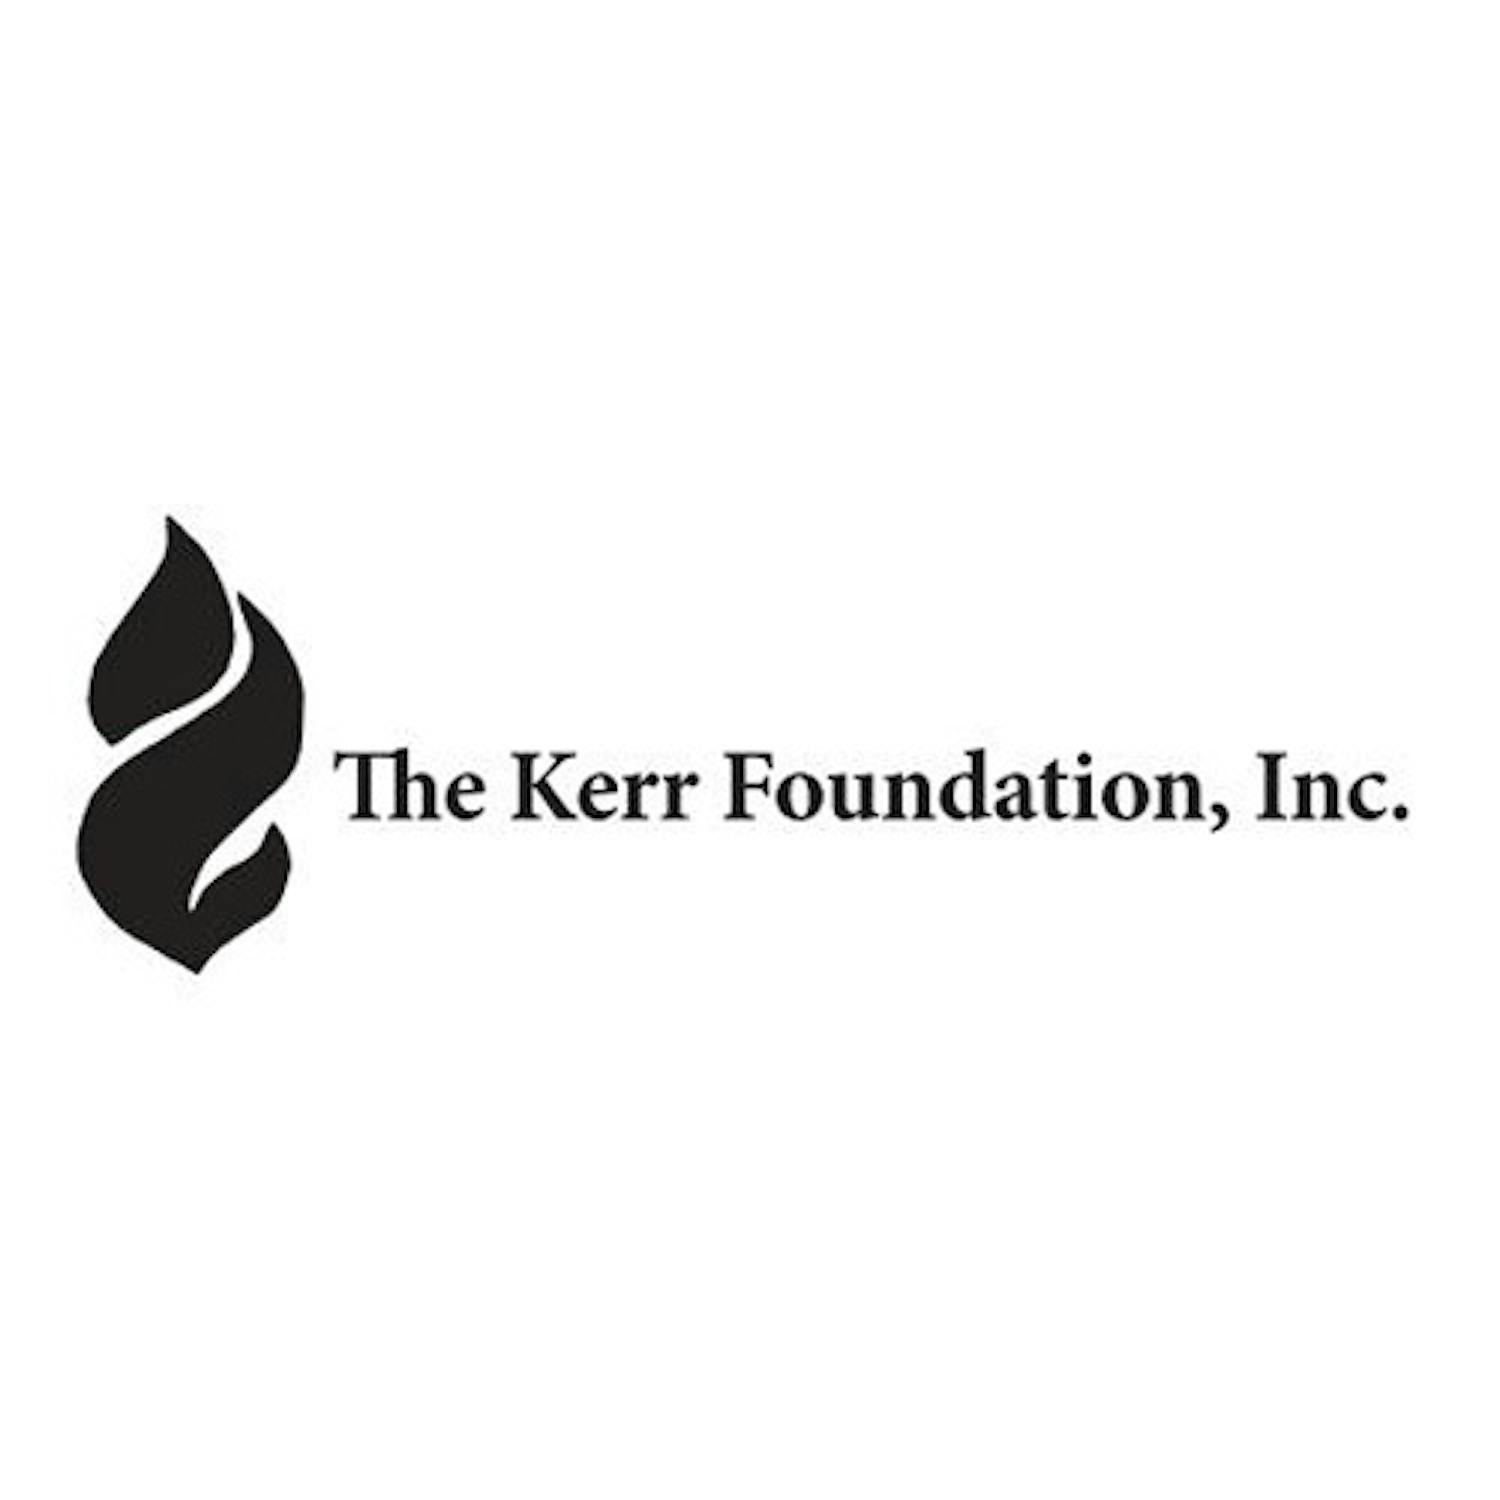 The Kerr Foundation, Inc.